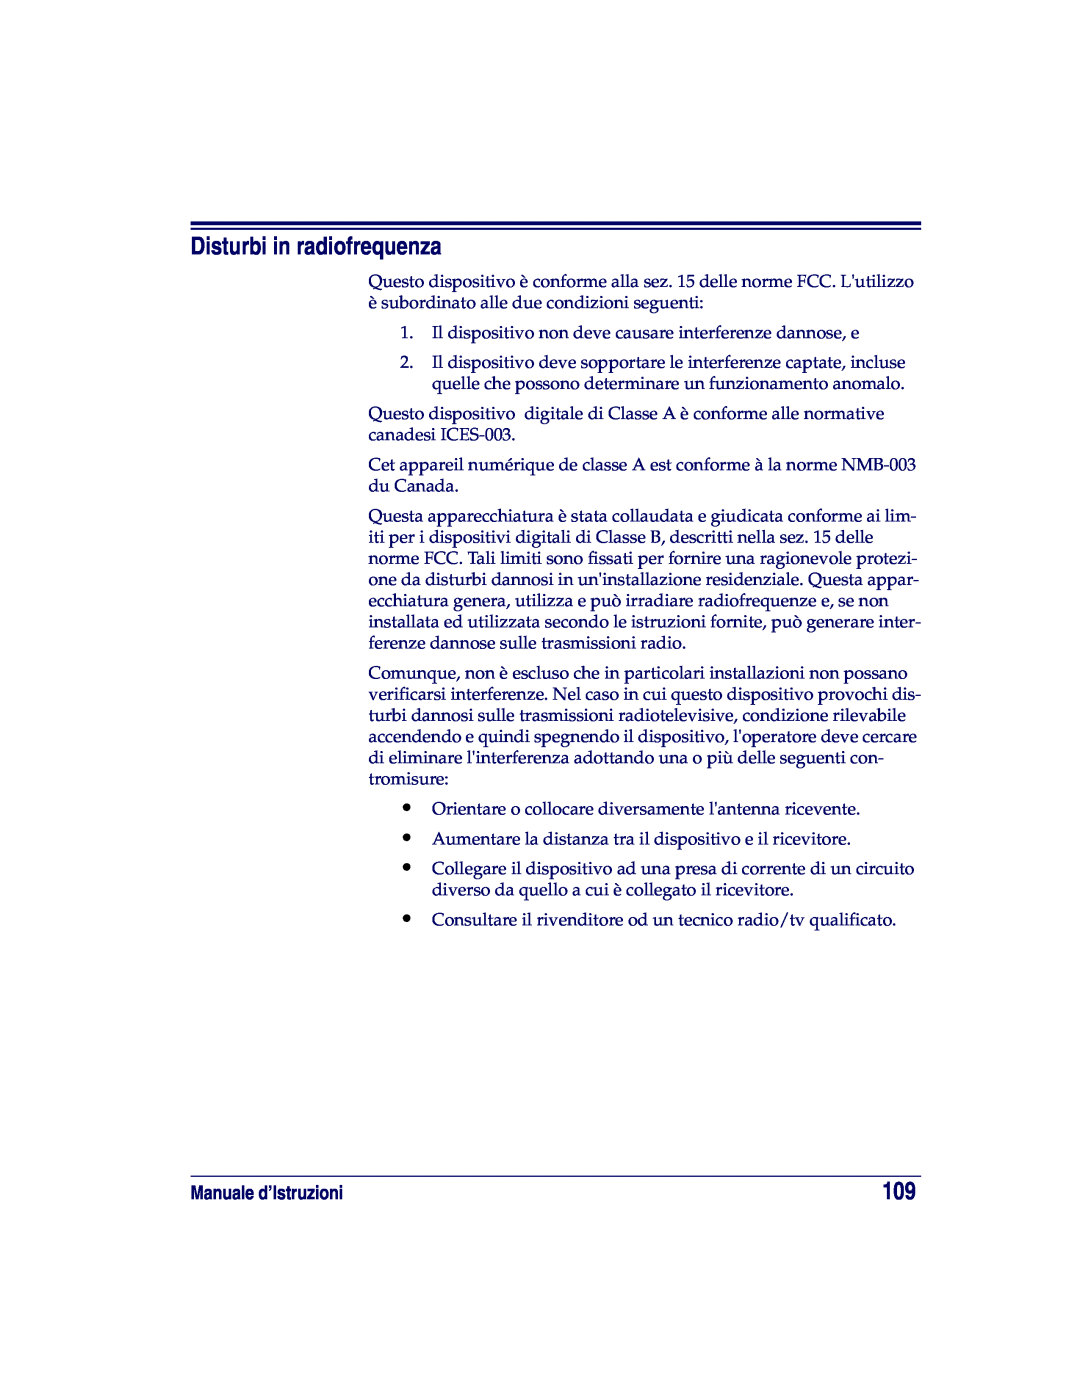 Datalogic Scanning XLR, SR, HD manual Disturbi in radiofrequenza, Manuale d’Istruzioni 